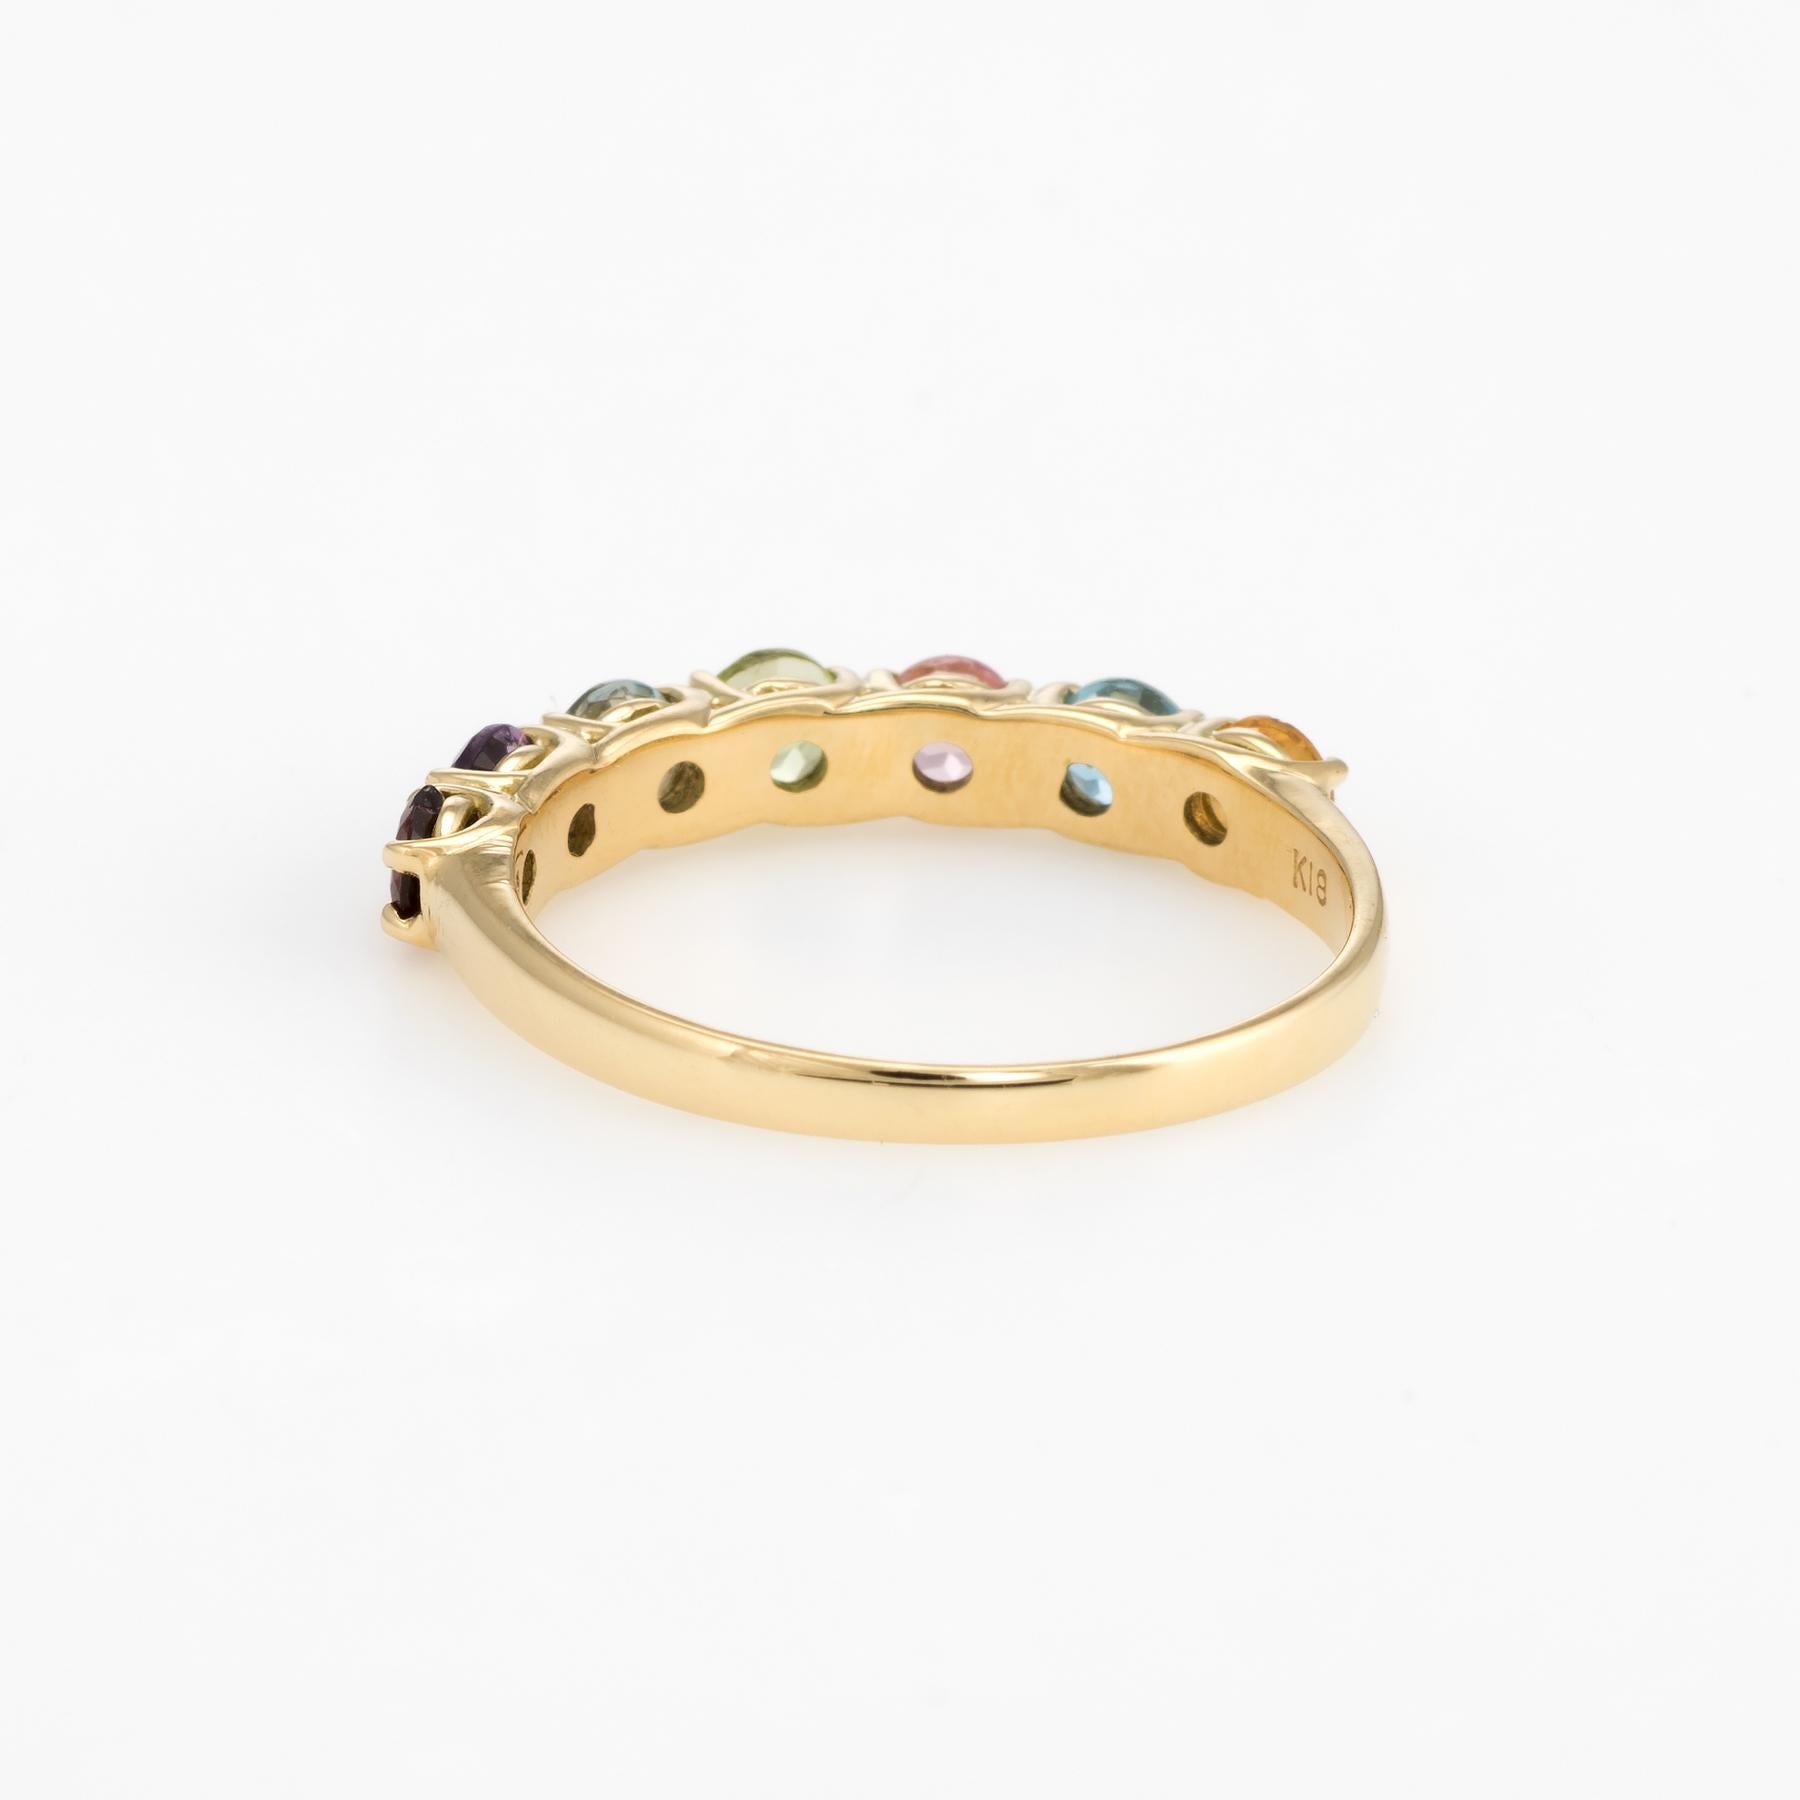 rings with semi precious stones